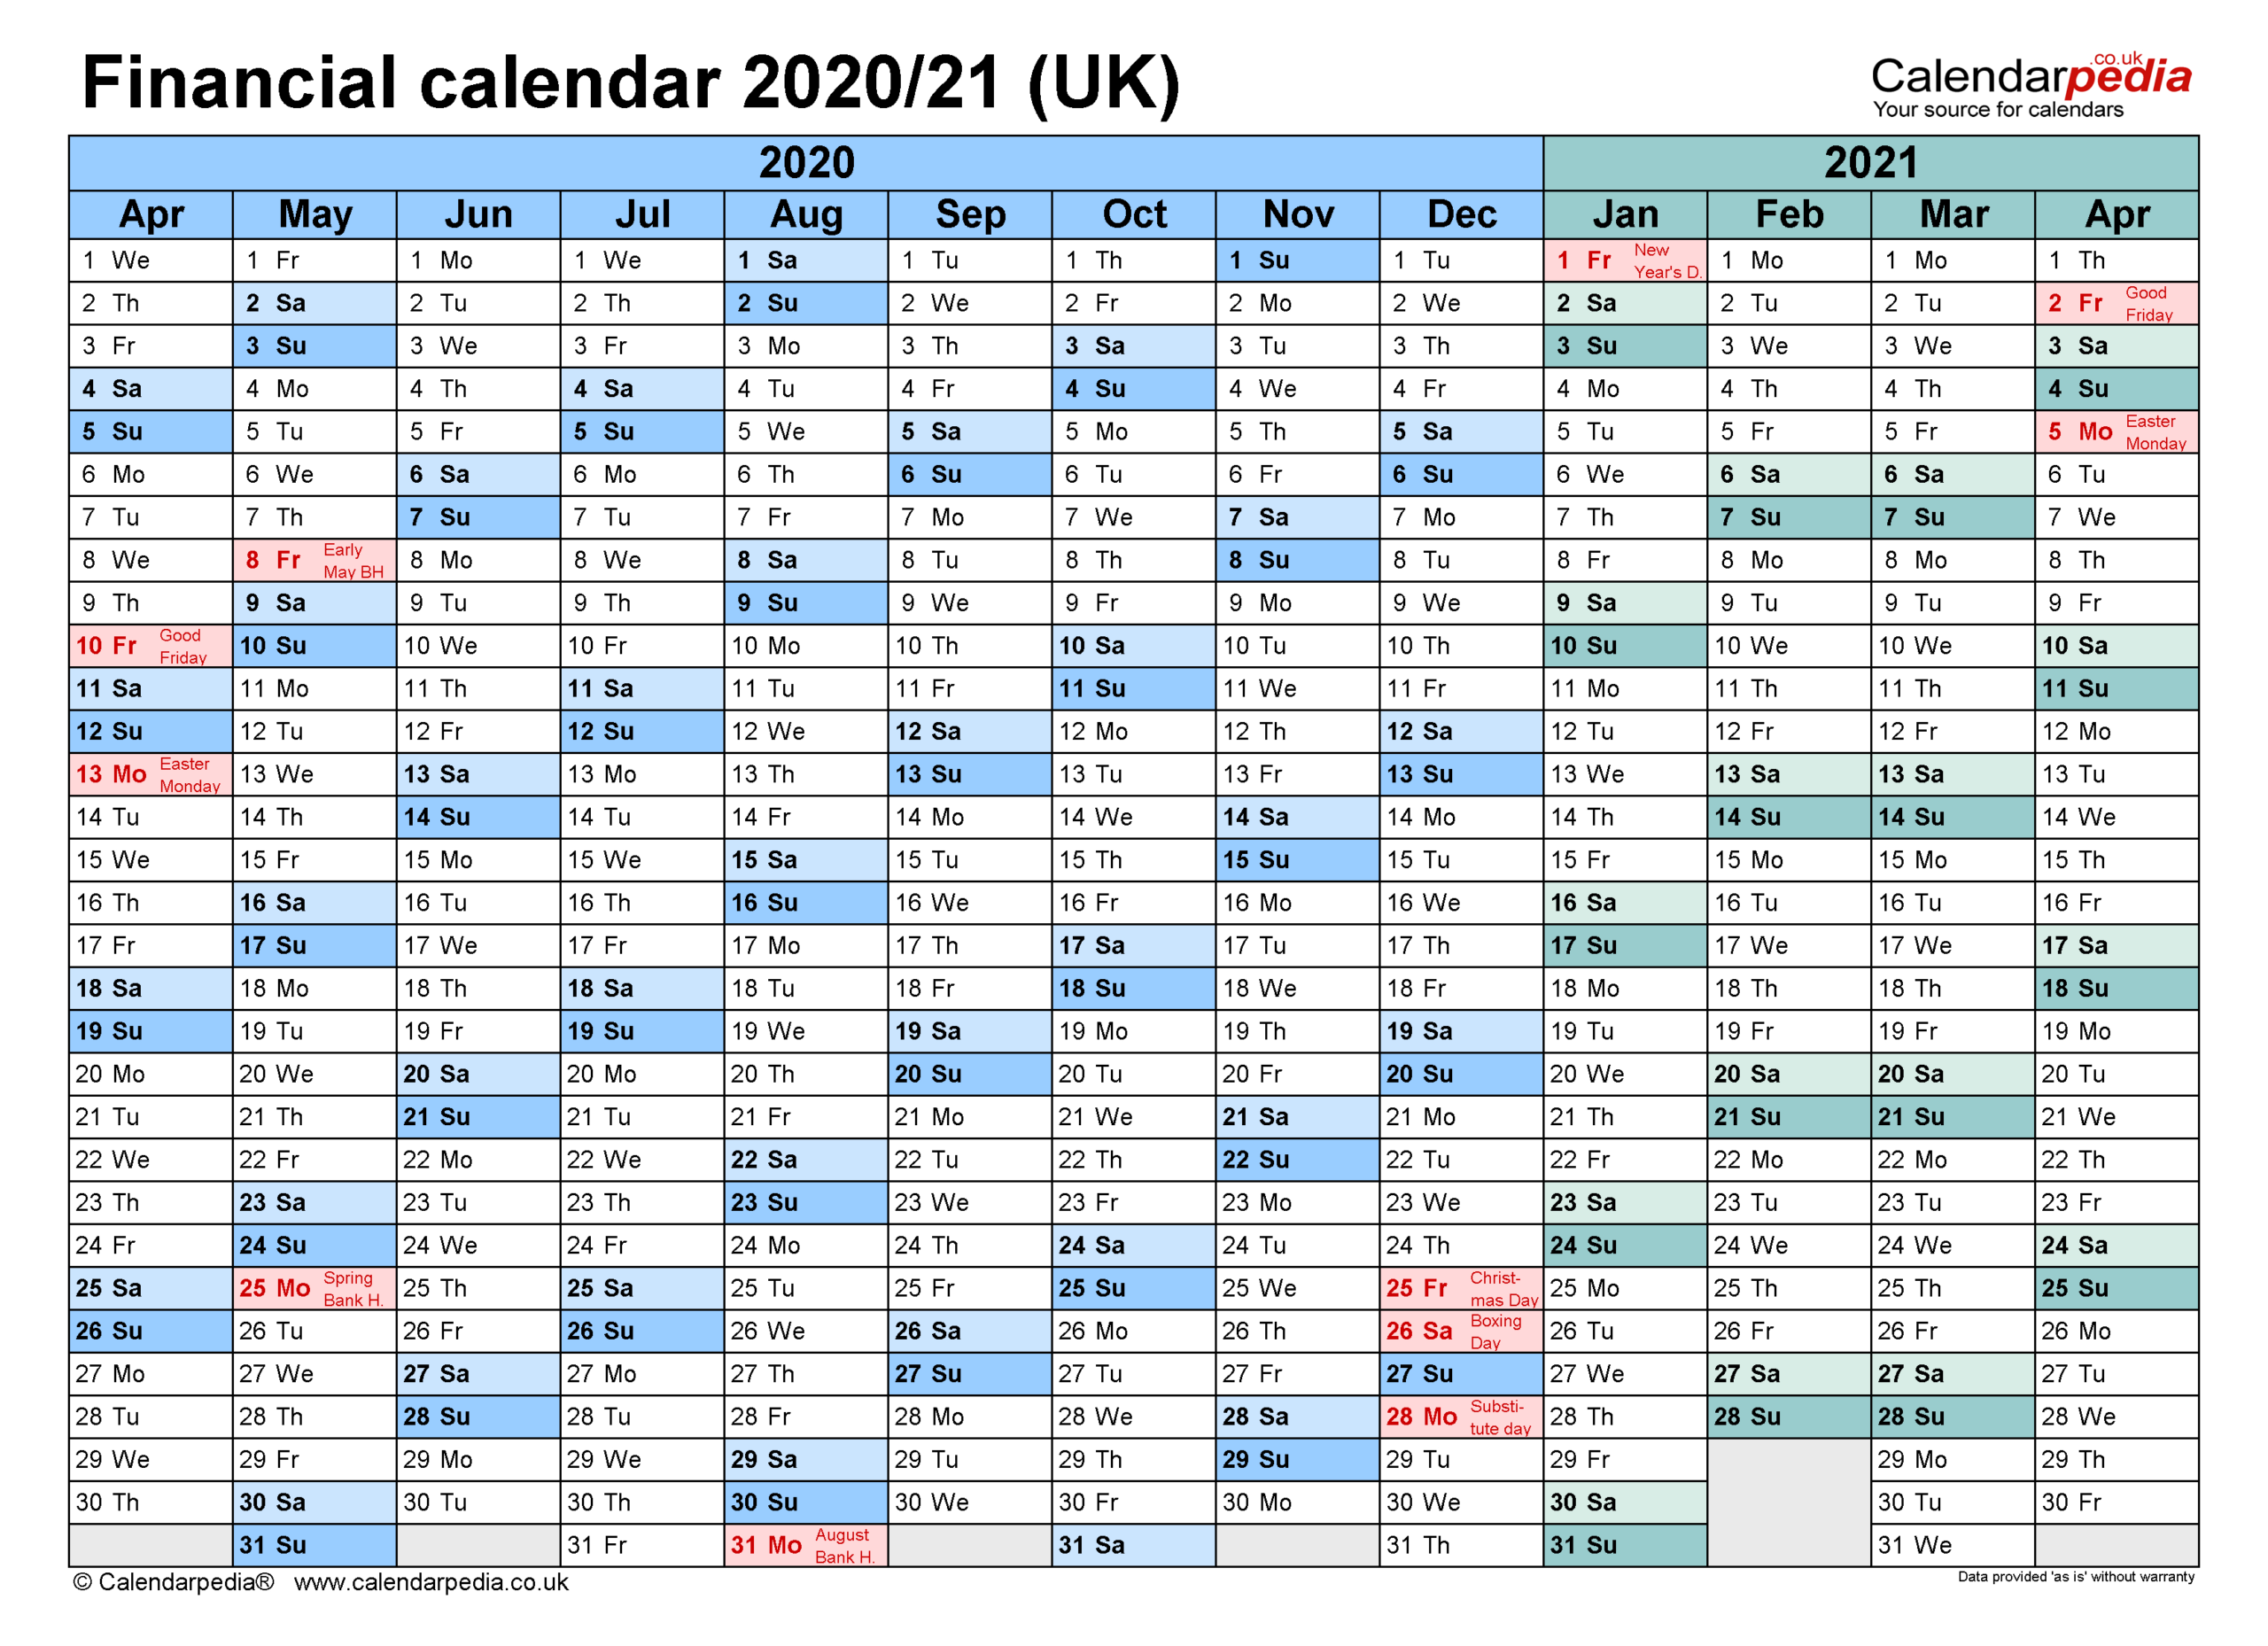 Financial Calendars 2020/21 Uk In Pdf Format